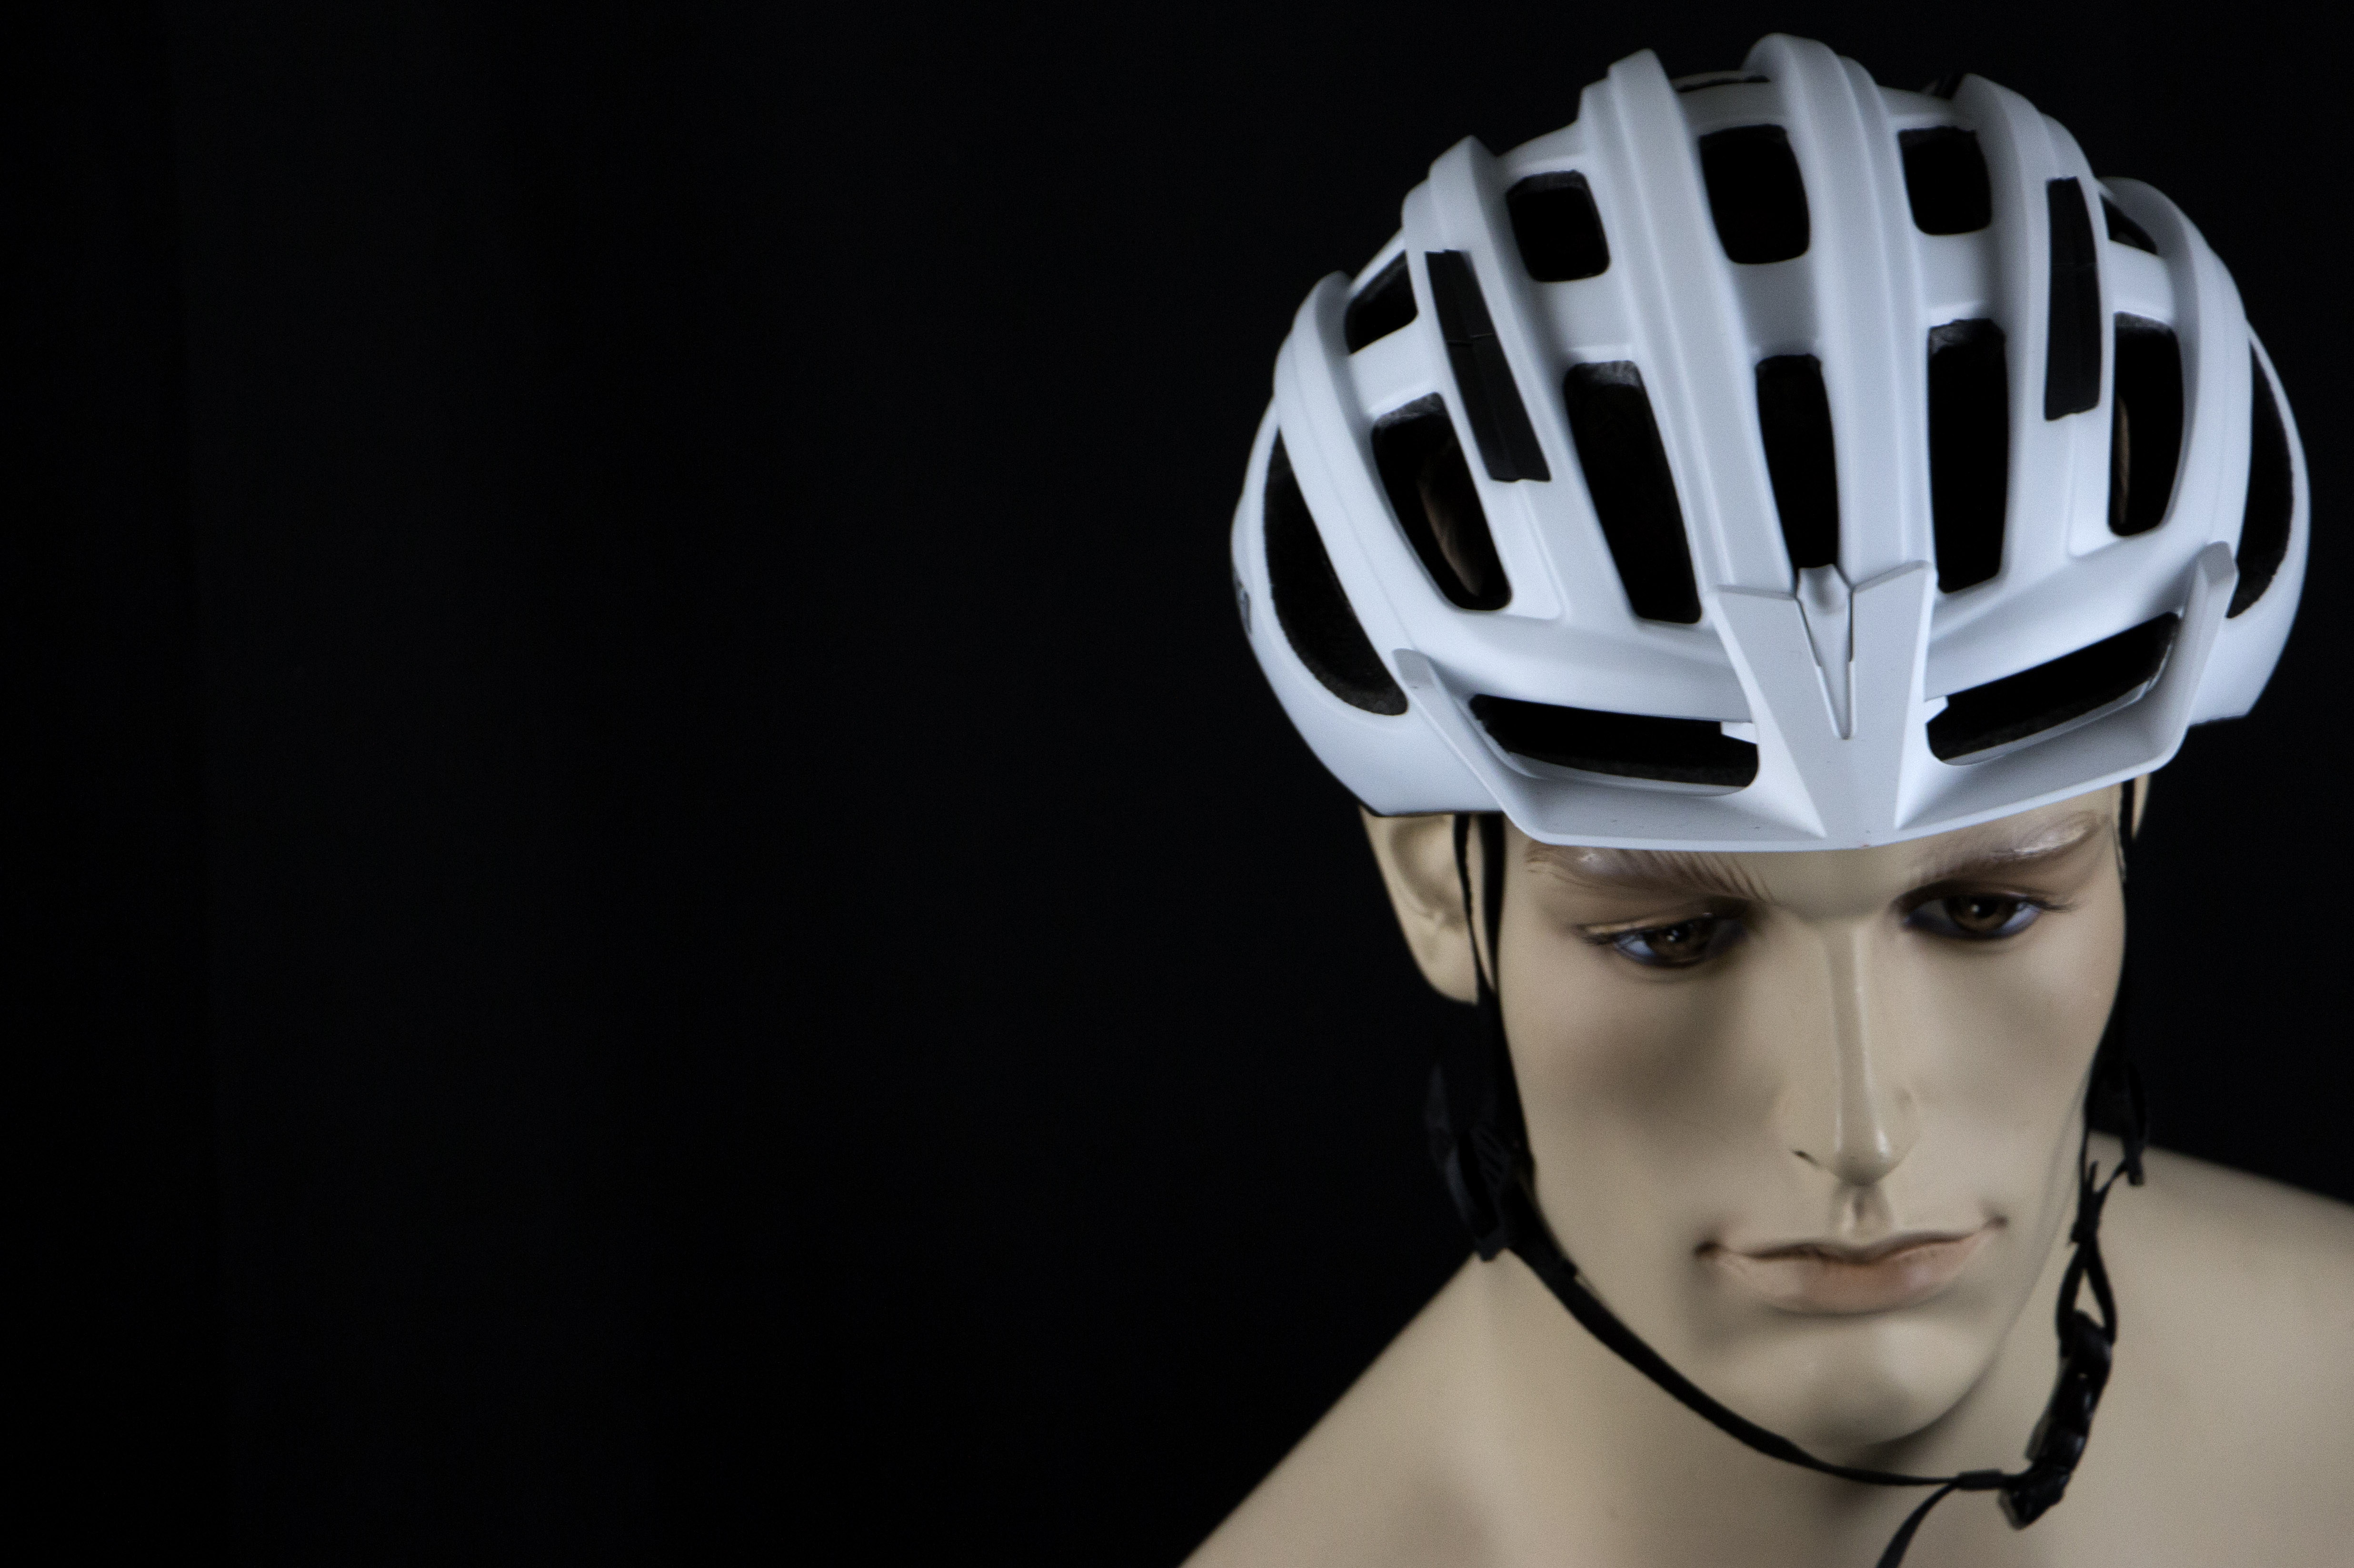 specialized propero 3 angi mips road helmet